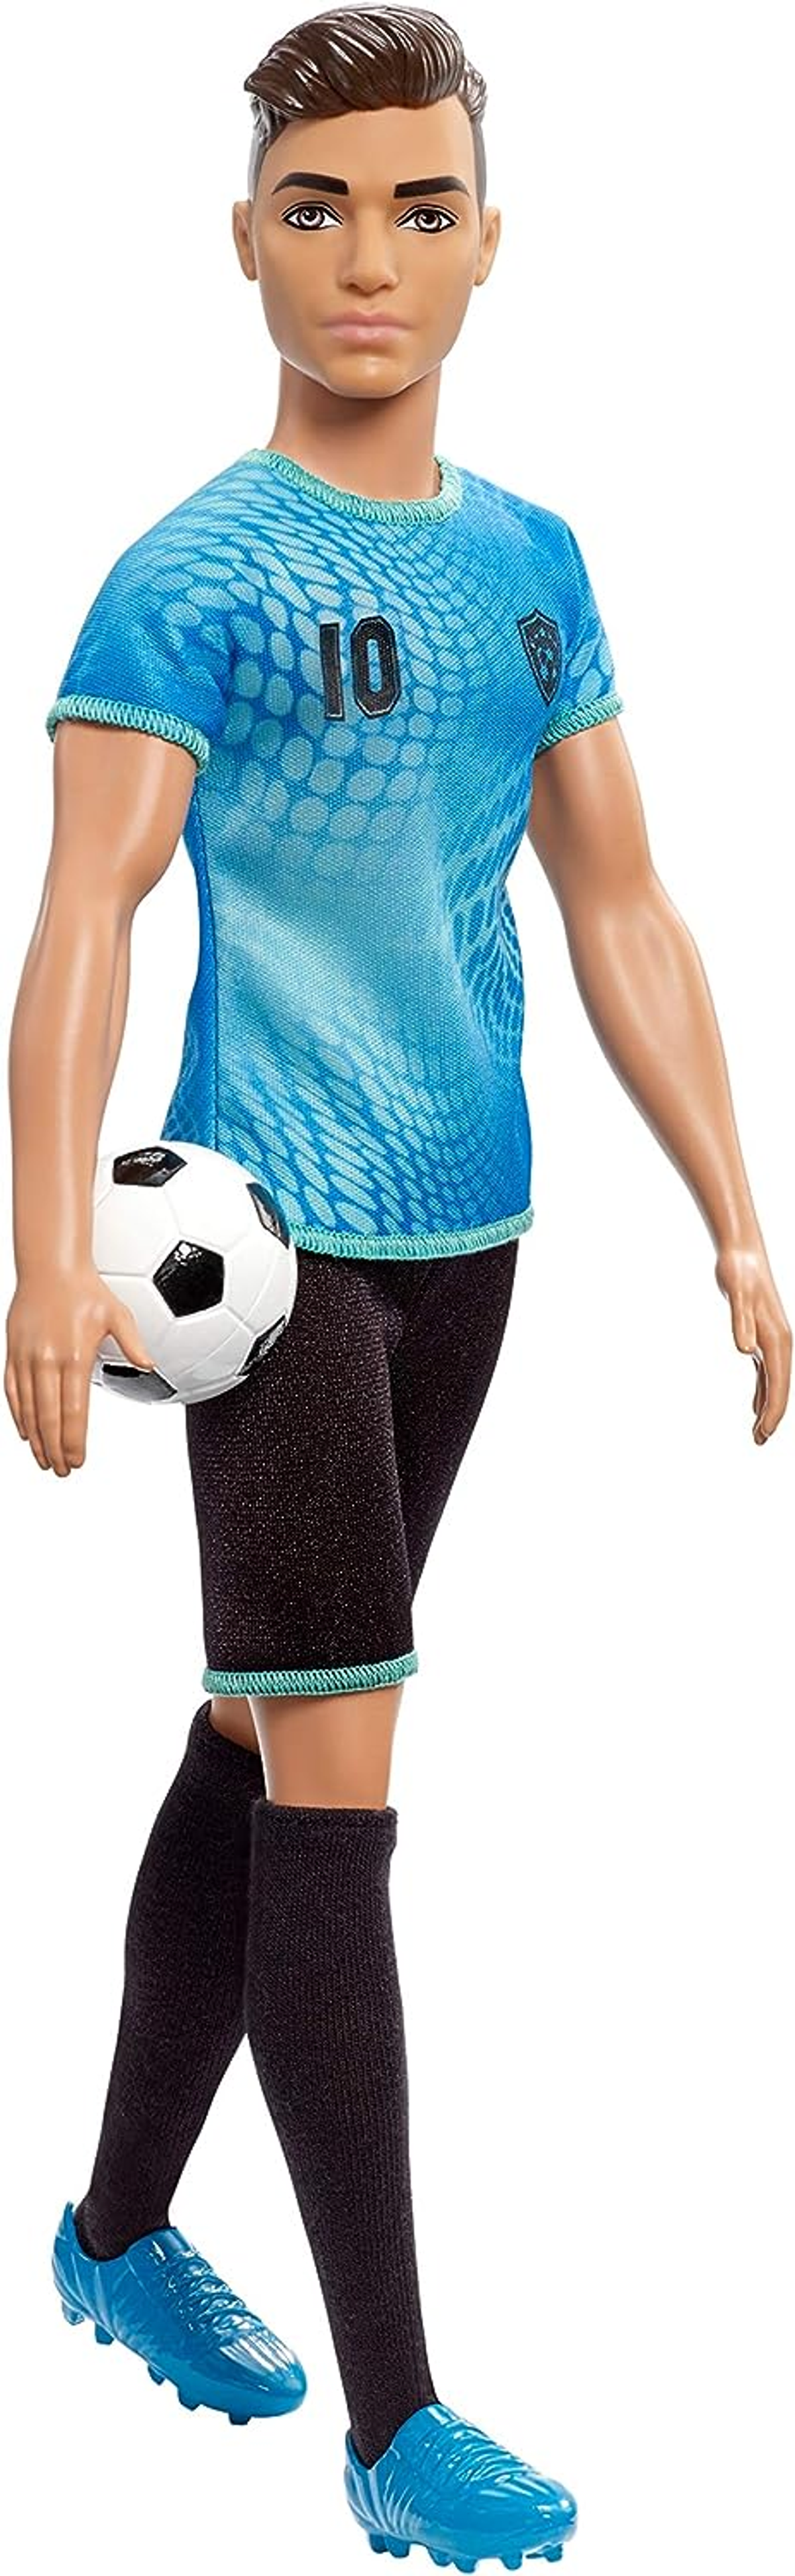 Ser Yo Barbie FXP02 Spielzeugpuppe Futbolista Ken MATTEL Quiero